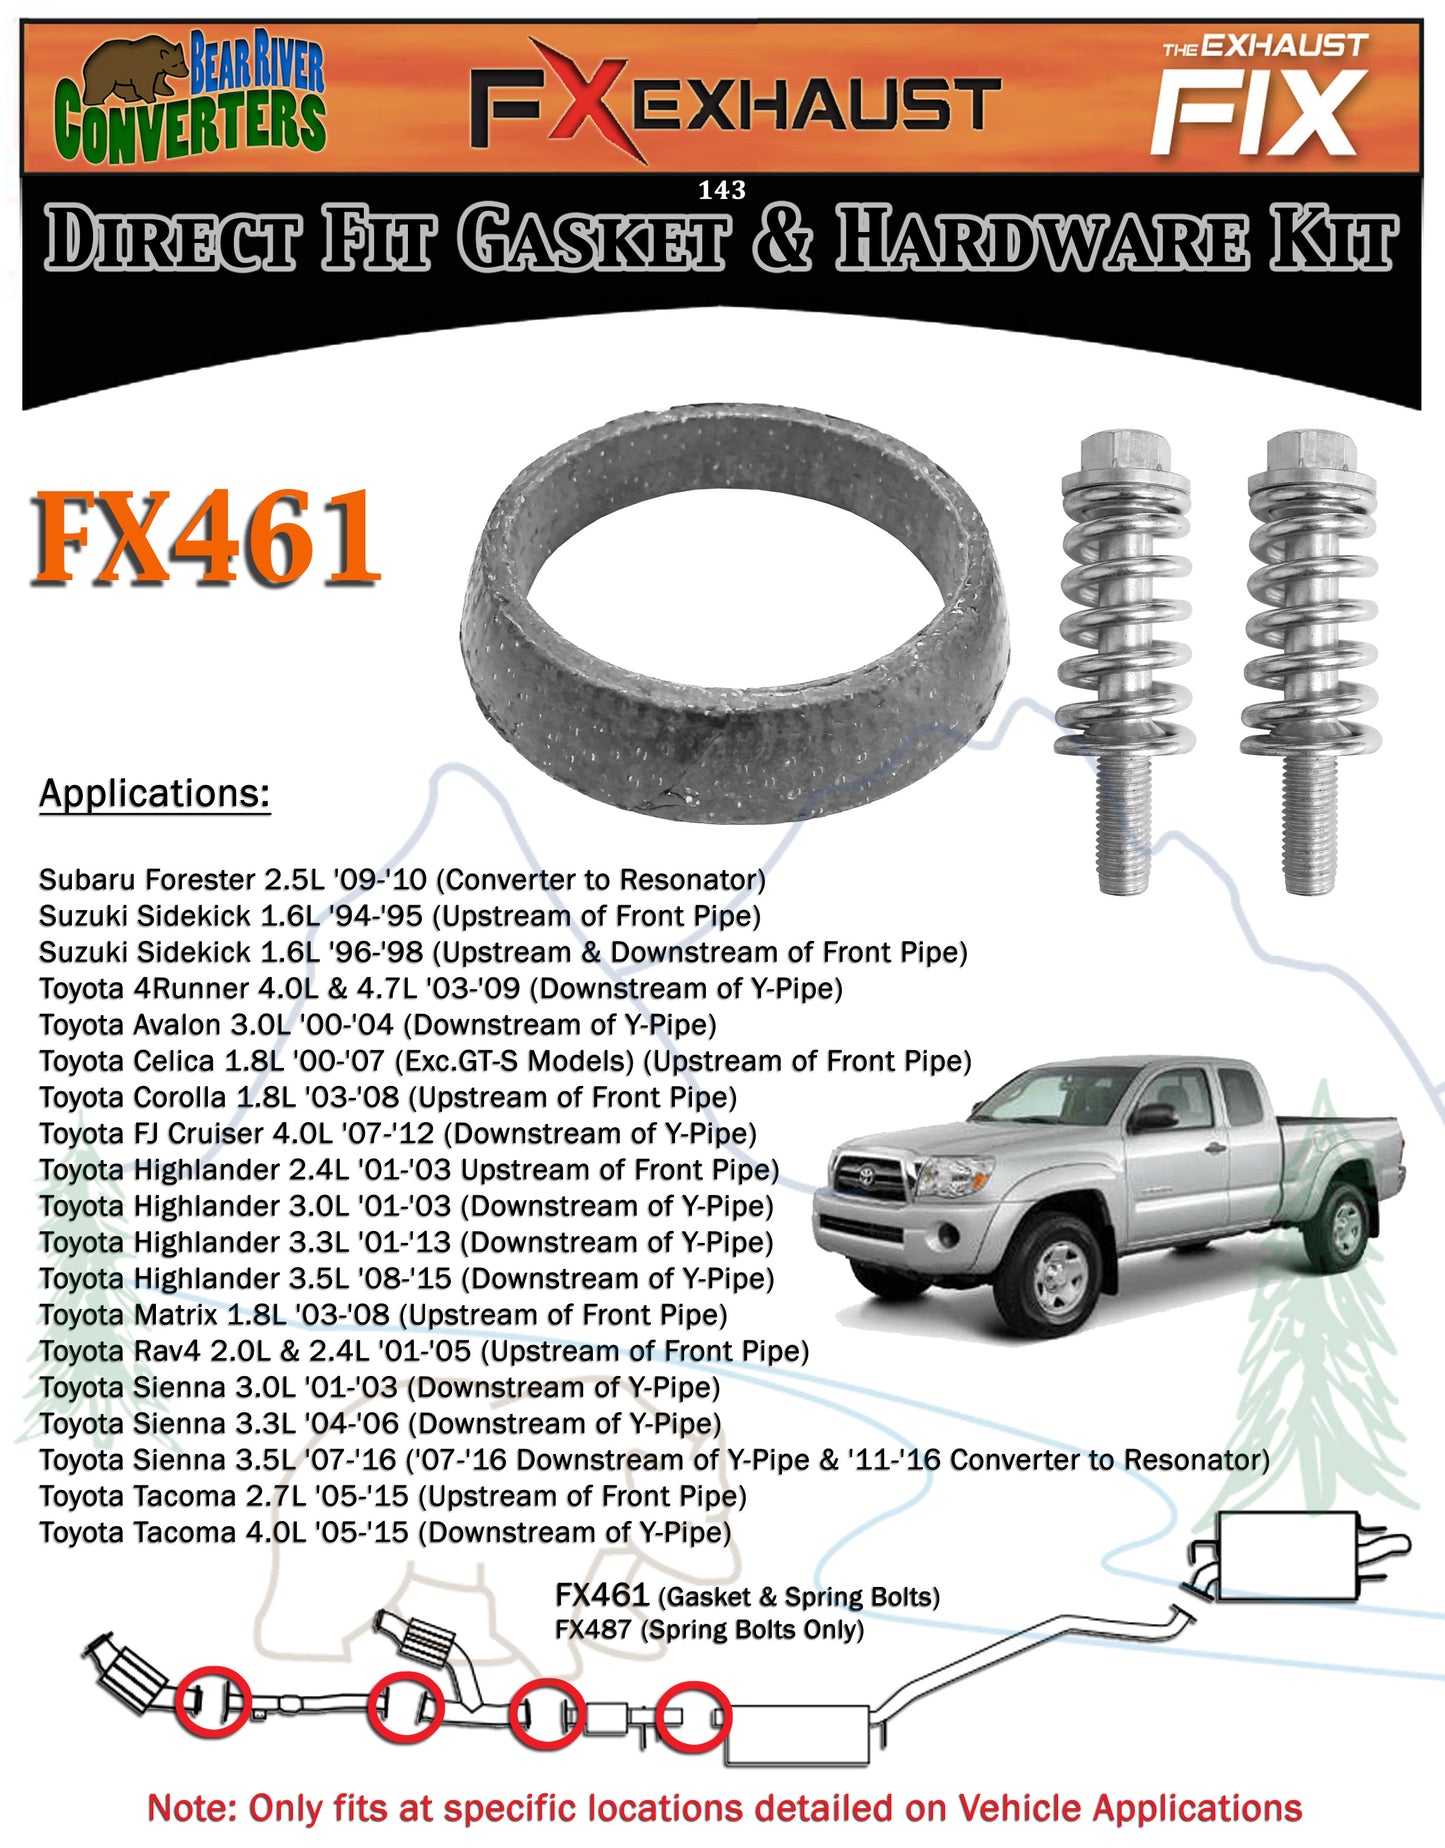 2 3/8" Donut Gasket & Spring Bolts for Forester Matrix Exhaust Hardware